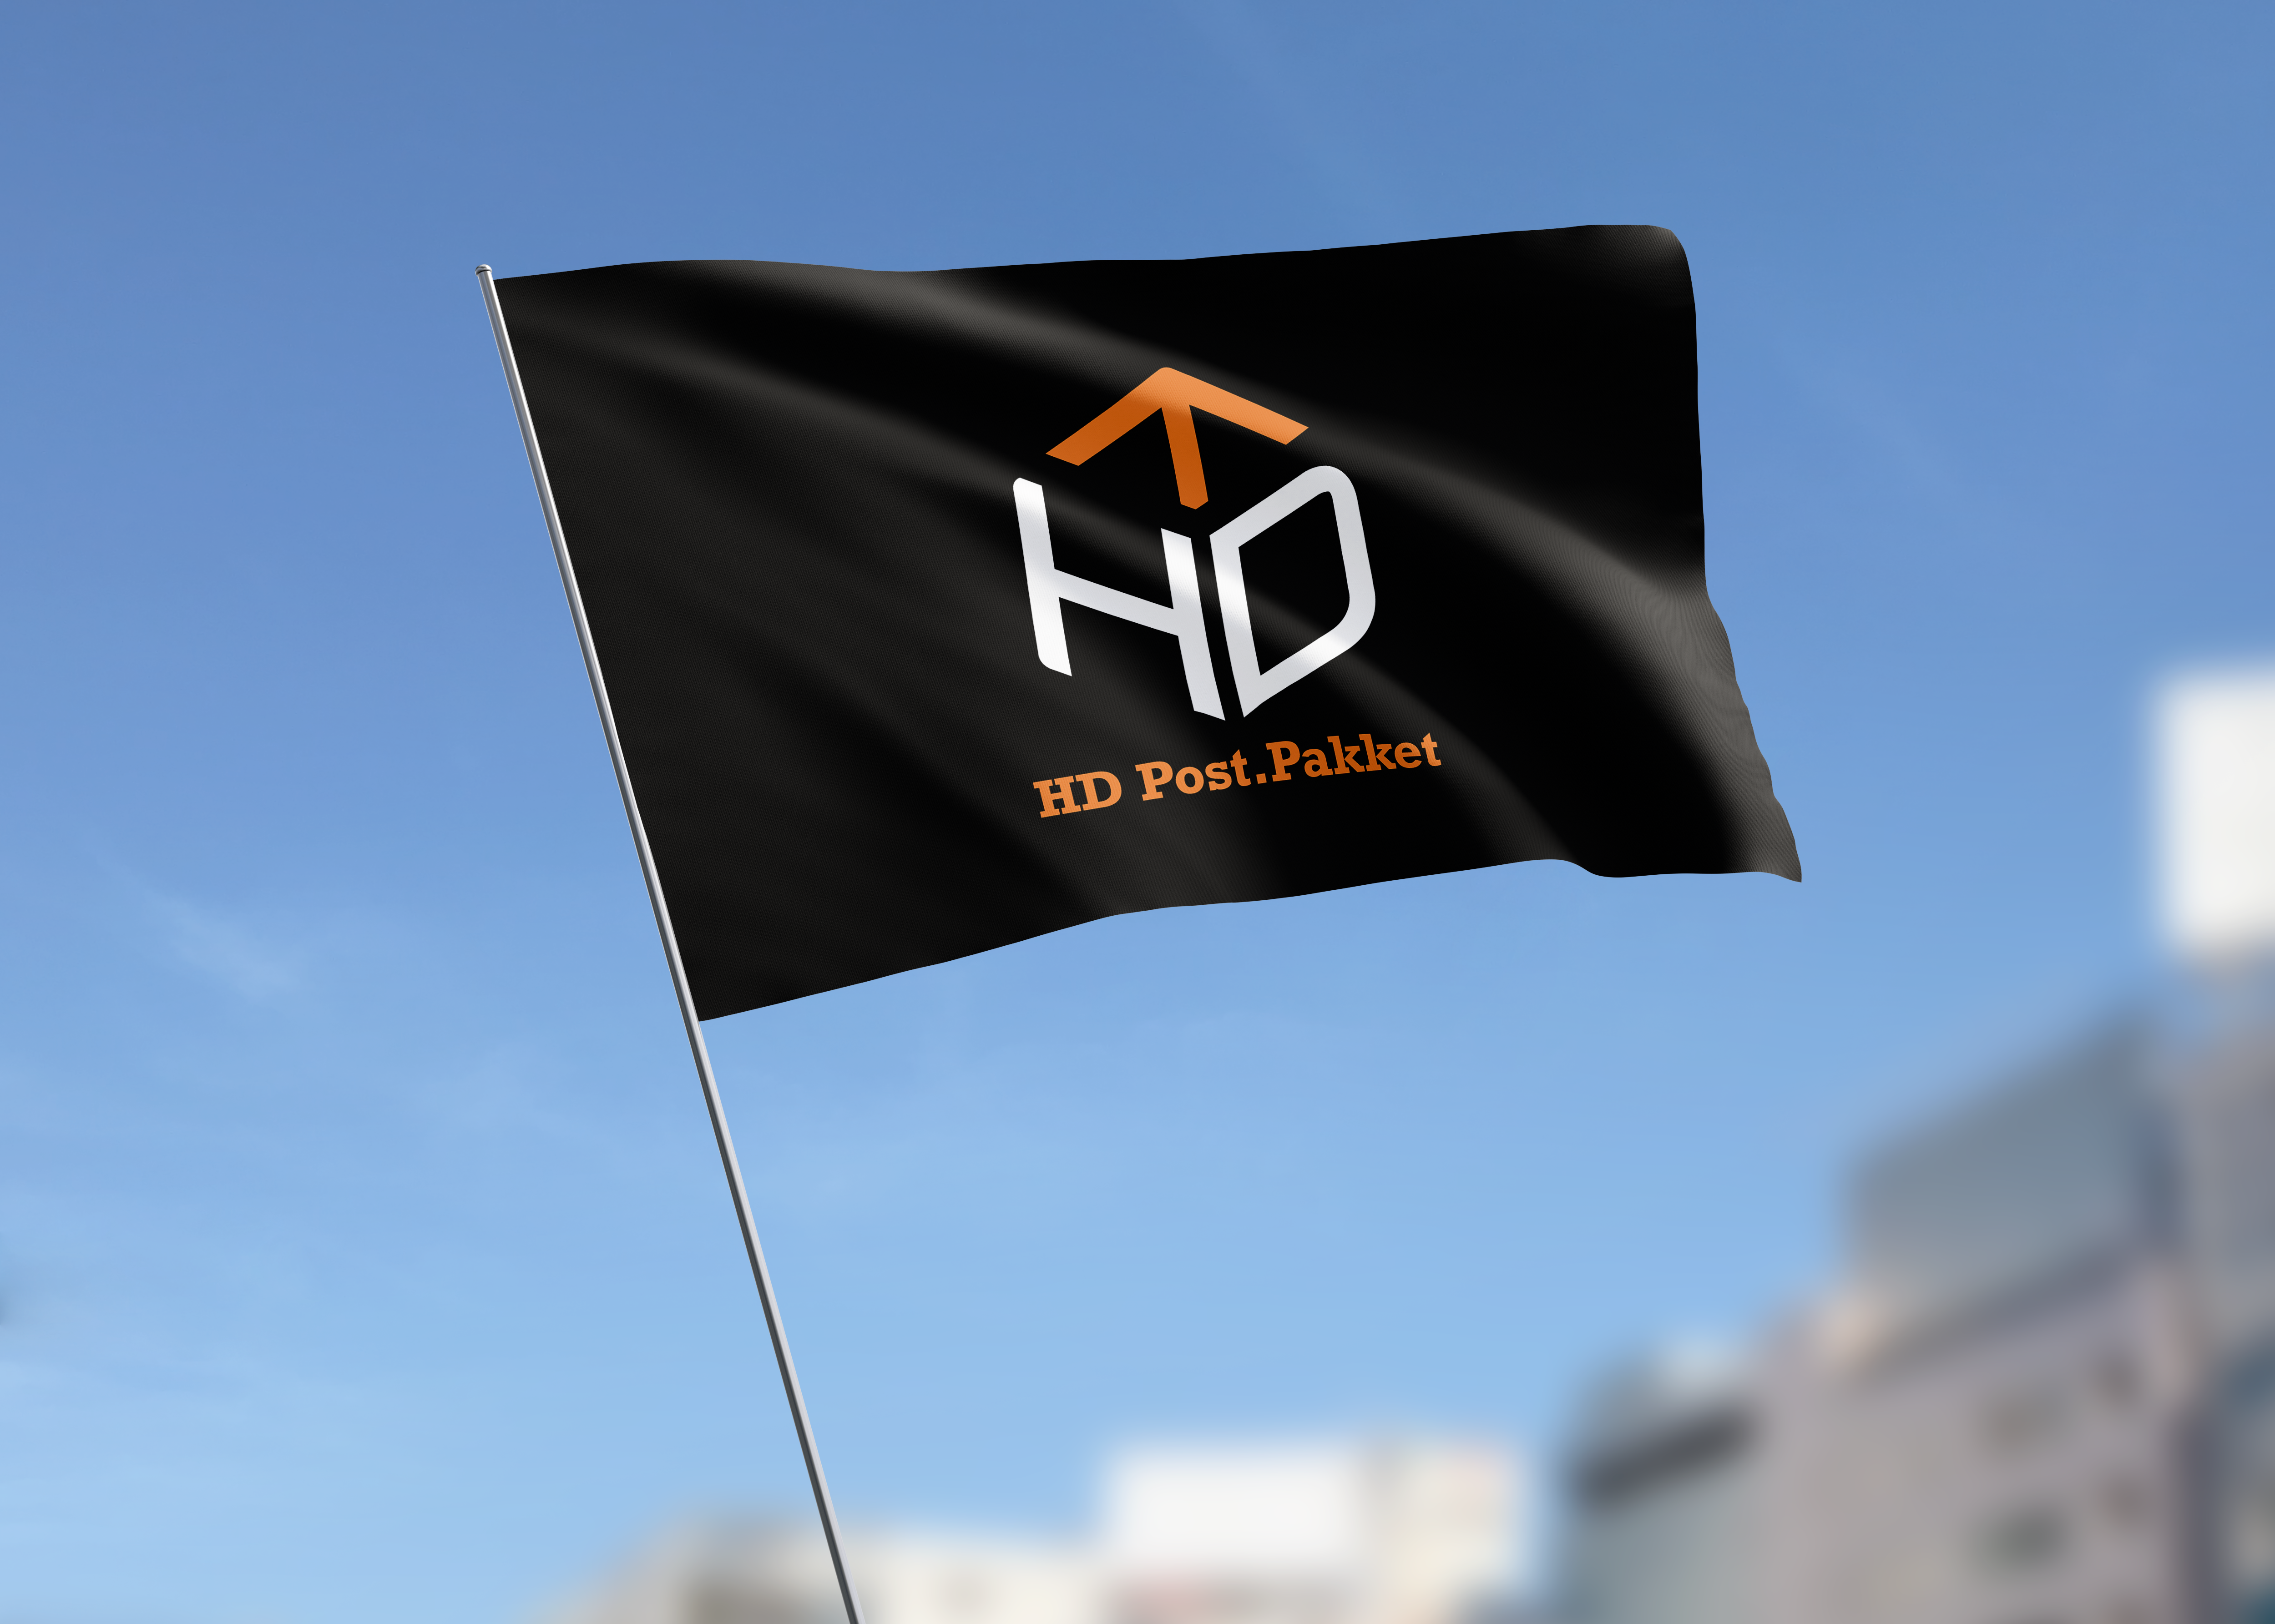 HD-post-pakket service flag